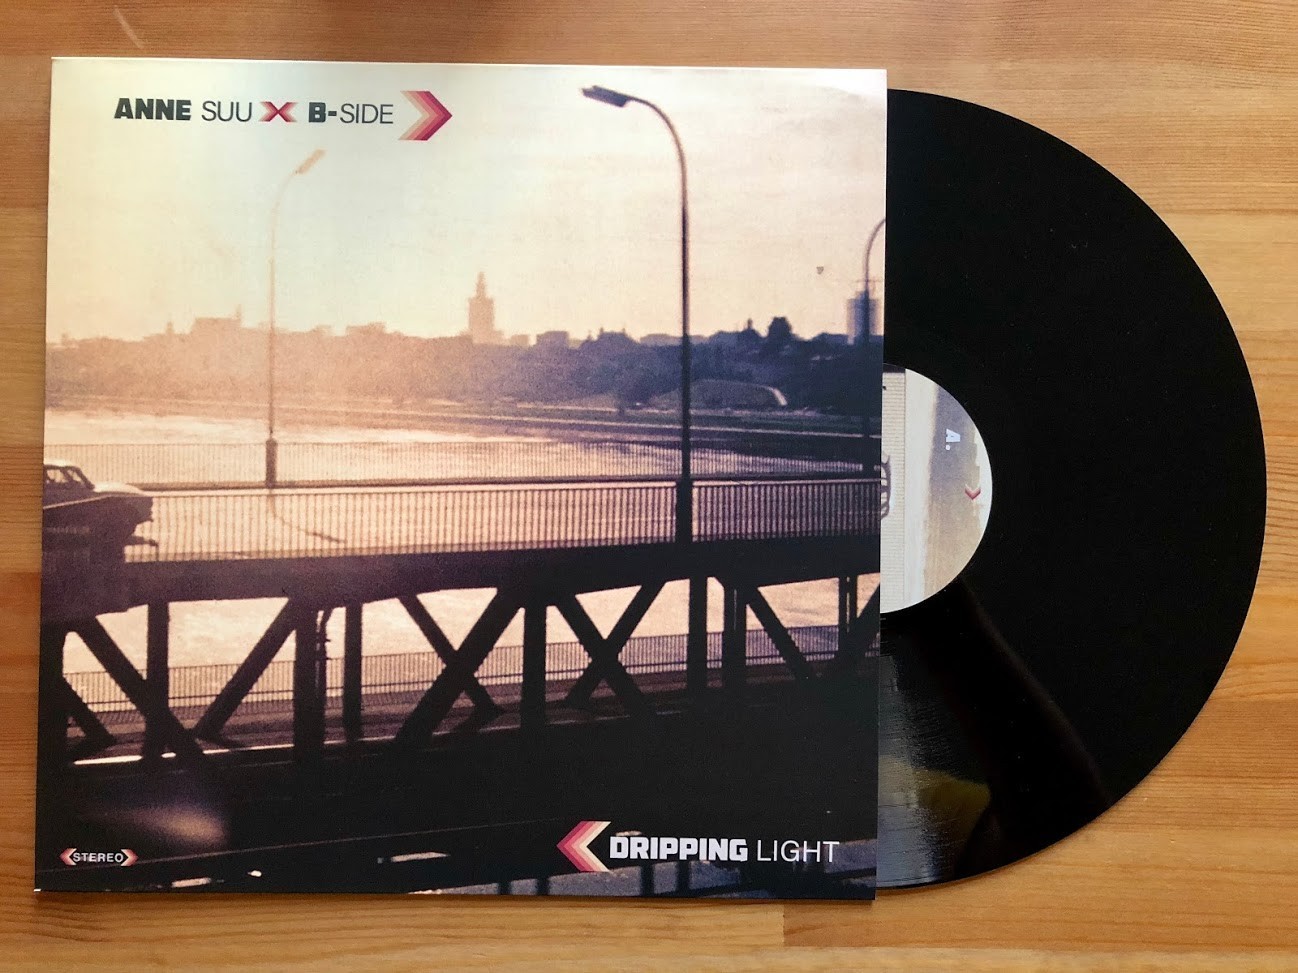 Anne Suu x B-Side - Dripping Light - Dezi-Belle Records